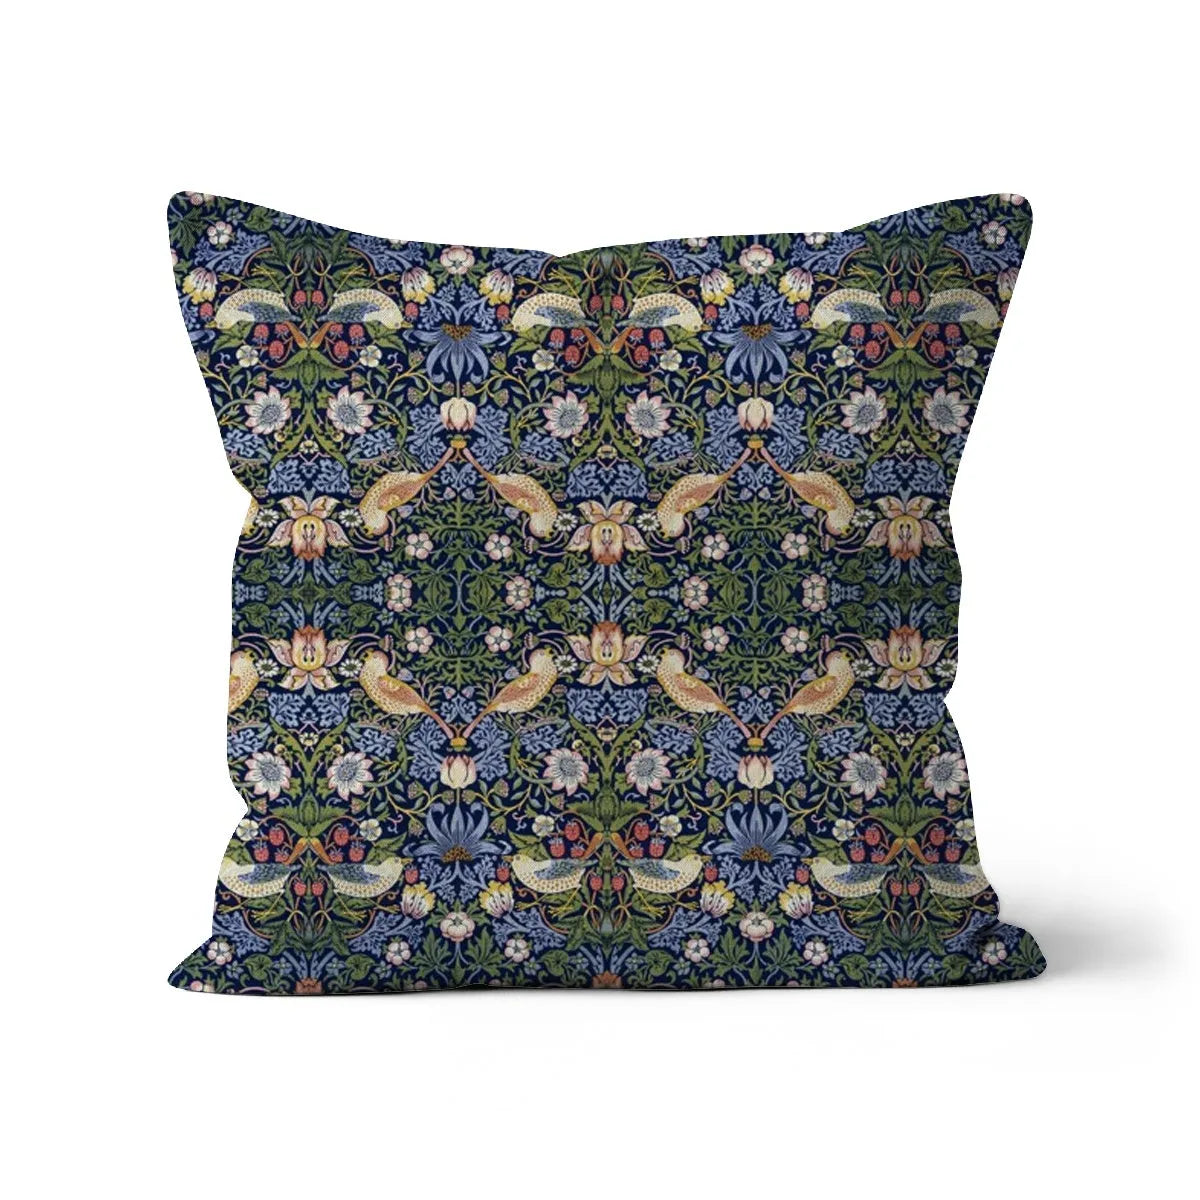 Strawberry Thief - William Morris Cushion - Decorative Throw Pillow - Linen / 18’x18’ - Throw Pillows - Aesthetic Art